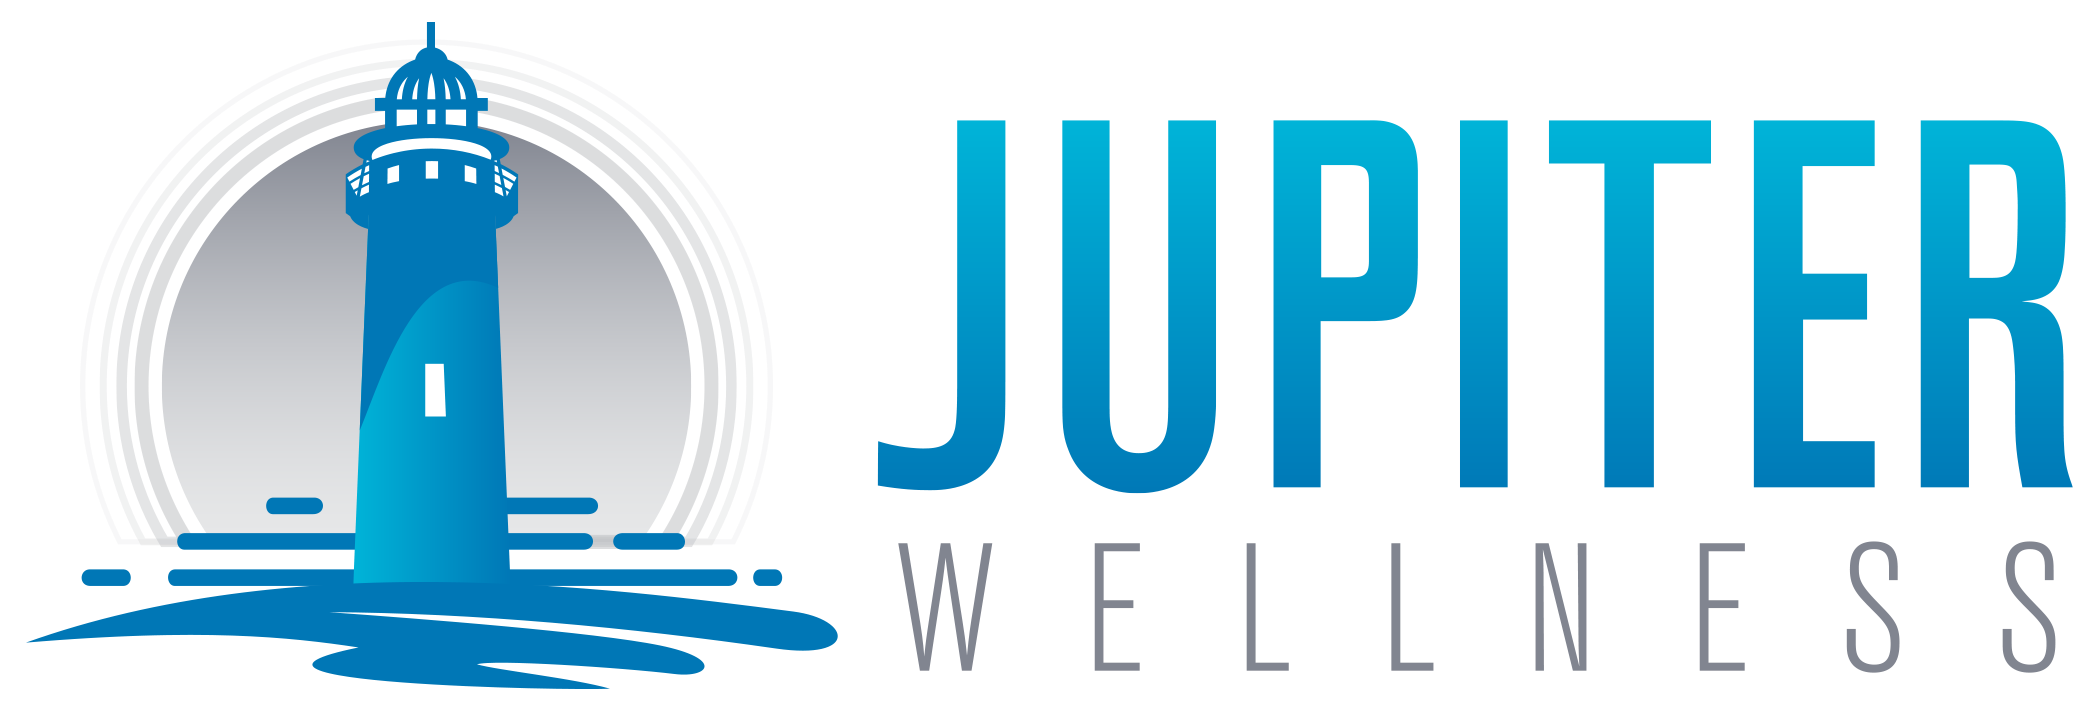 NASDAQ Company in the Multi-Billion Dollar Market Treating Skin Disorders Including Skin Cancer: Jupiter Wellness, Inc. (NASDAQ: JUPW)